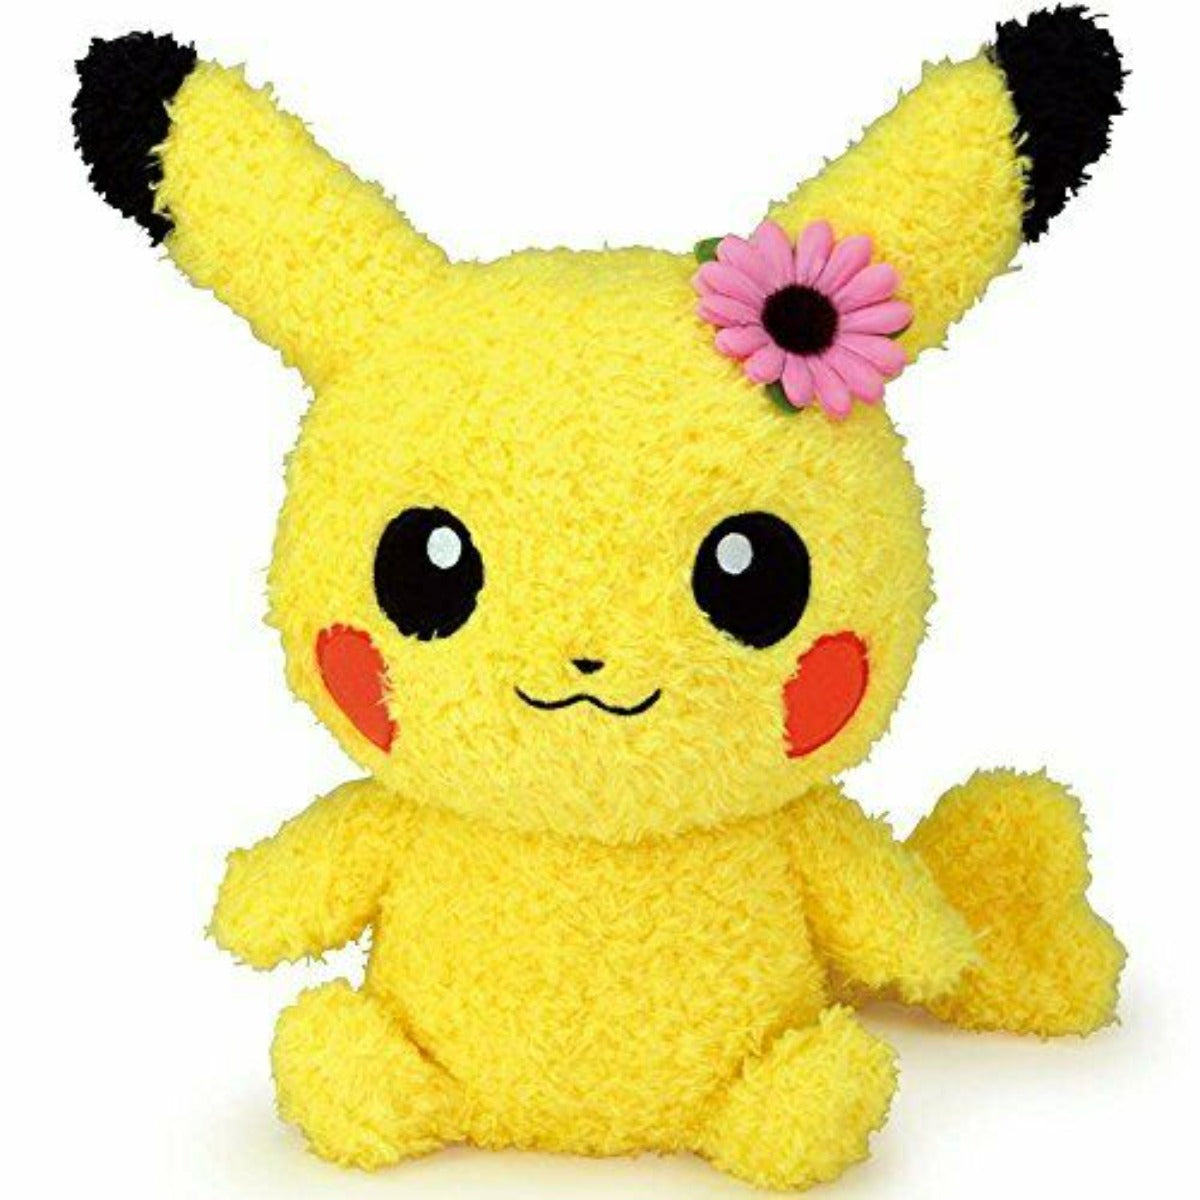 Plush - Pokémon Pikachu